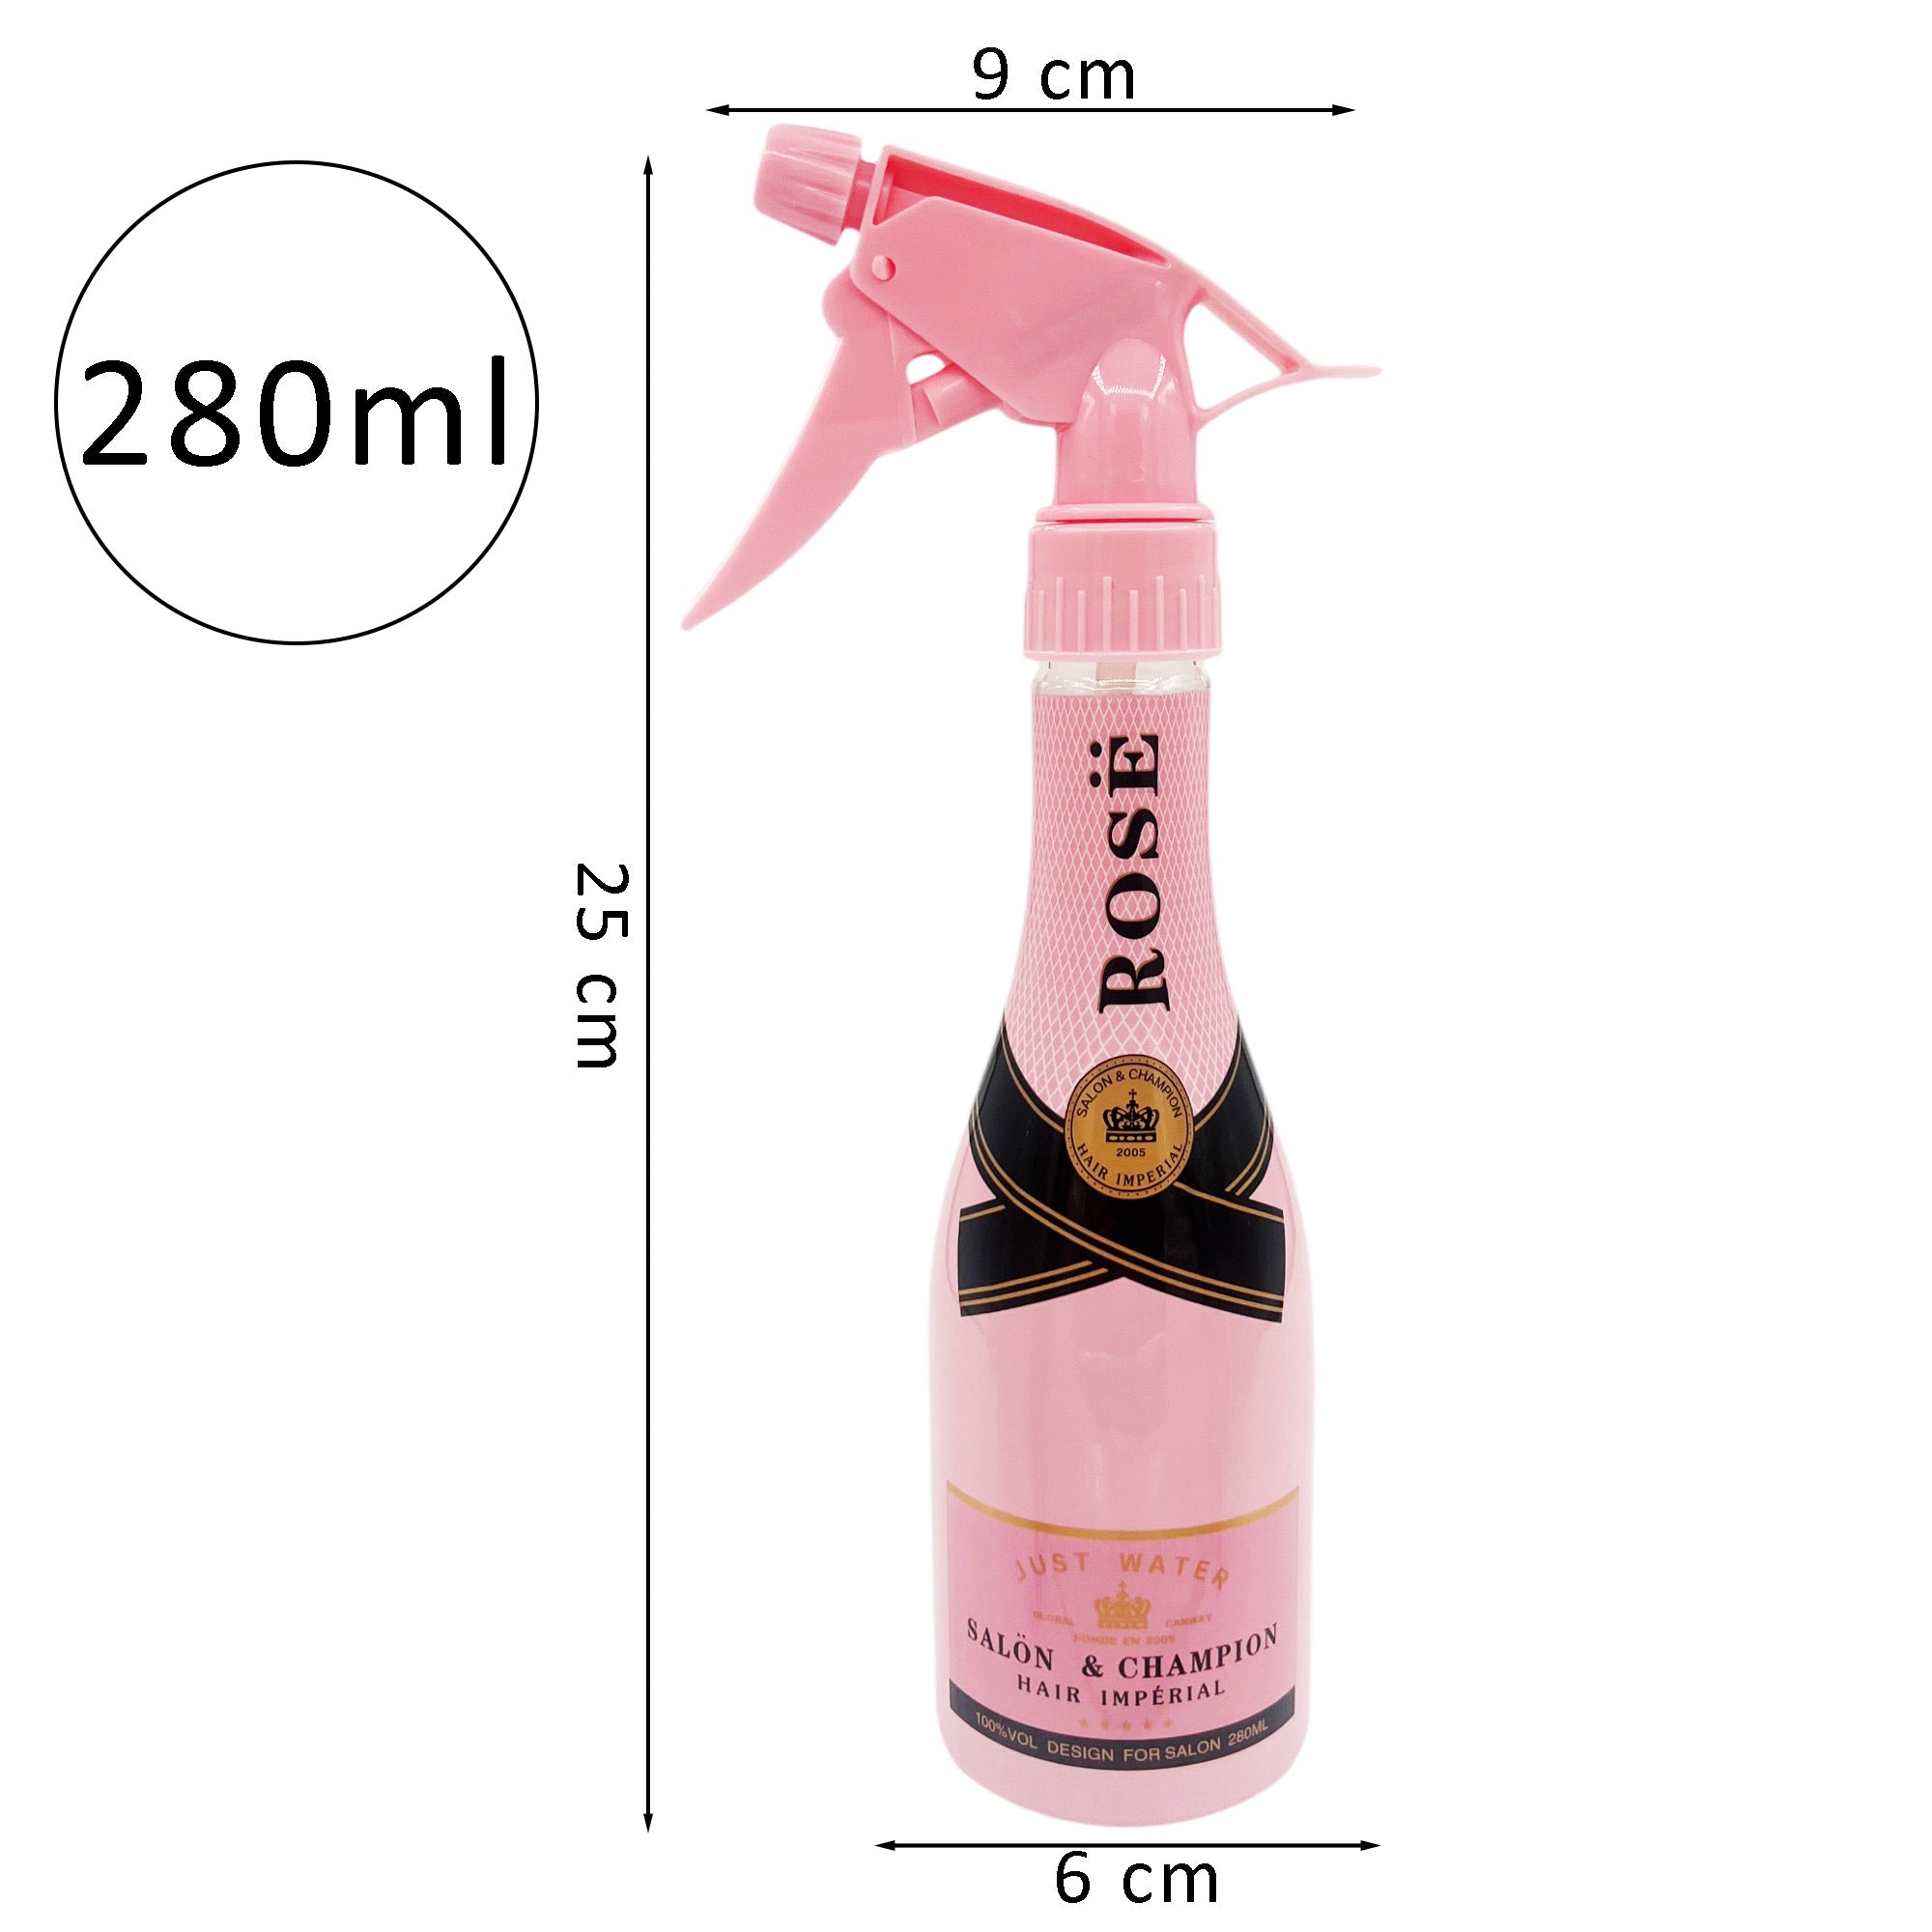 Eson - Water Spray Bottle 280ml Extreme Mist Sprayer Champagne Style (Pink) - Eson Direct